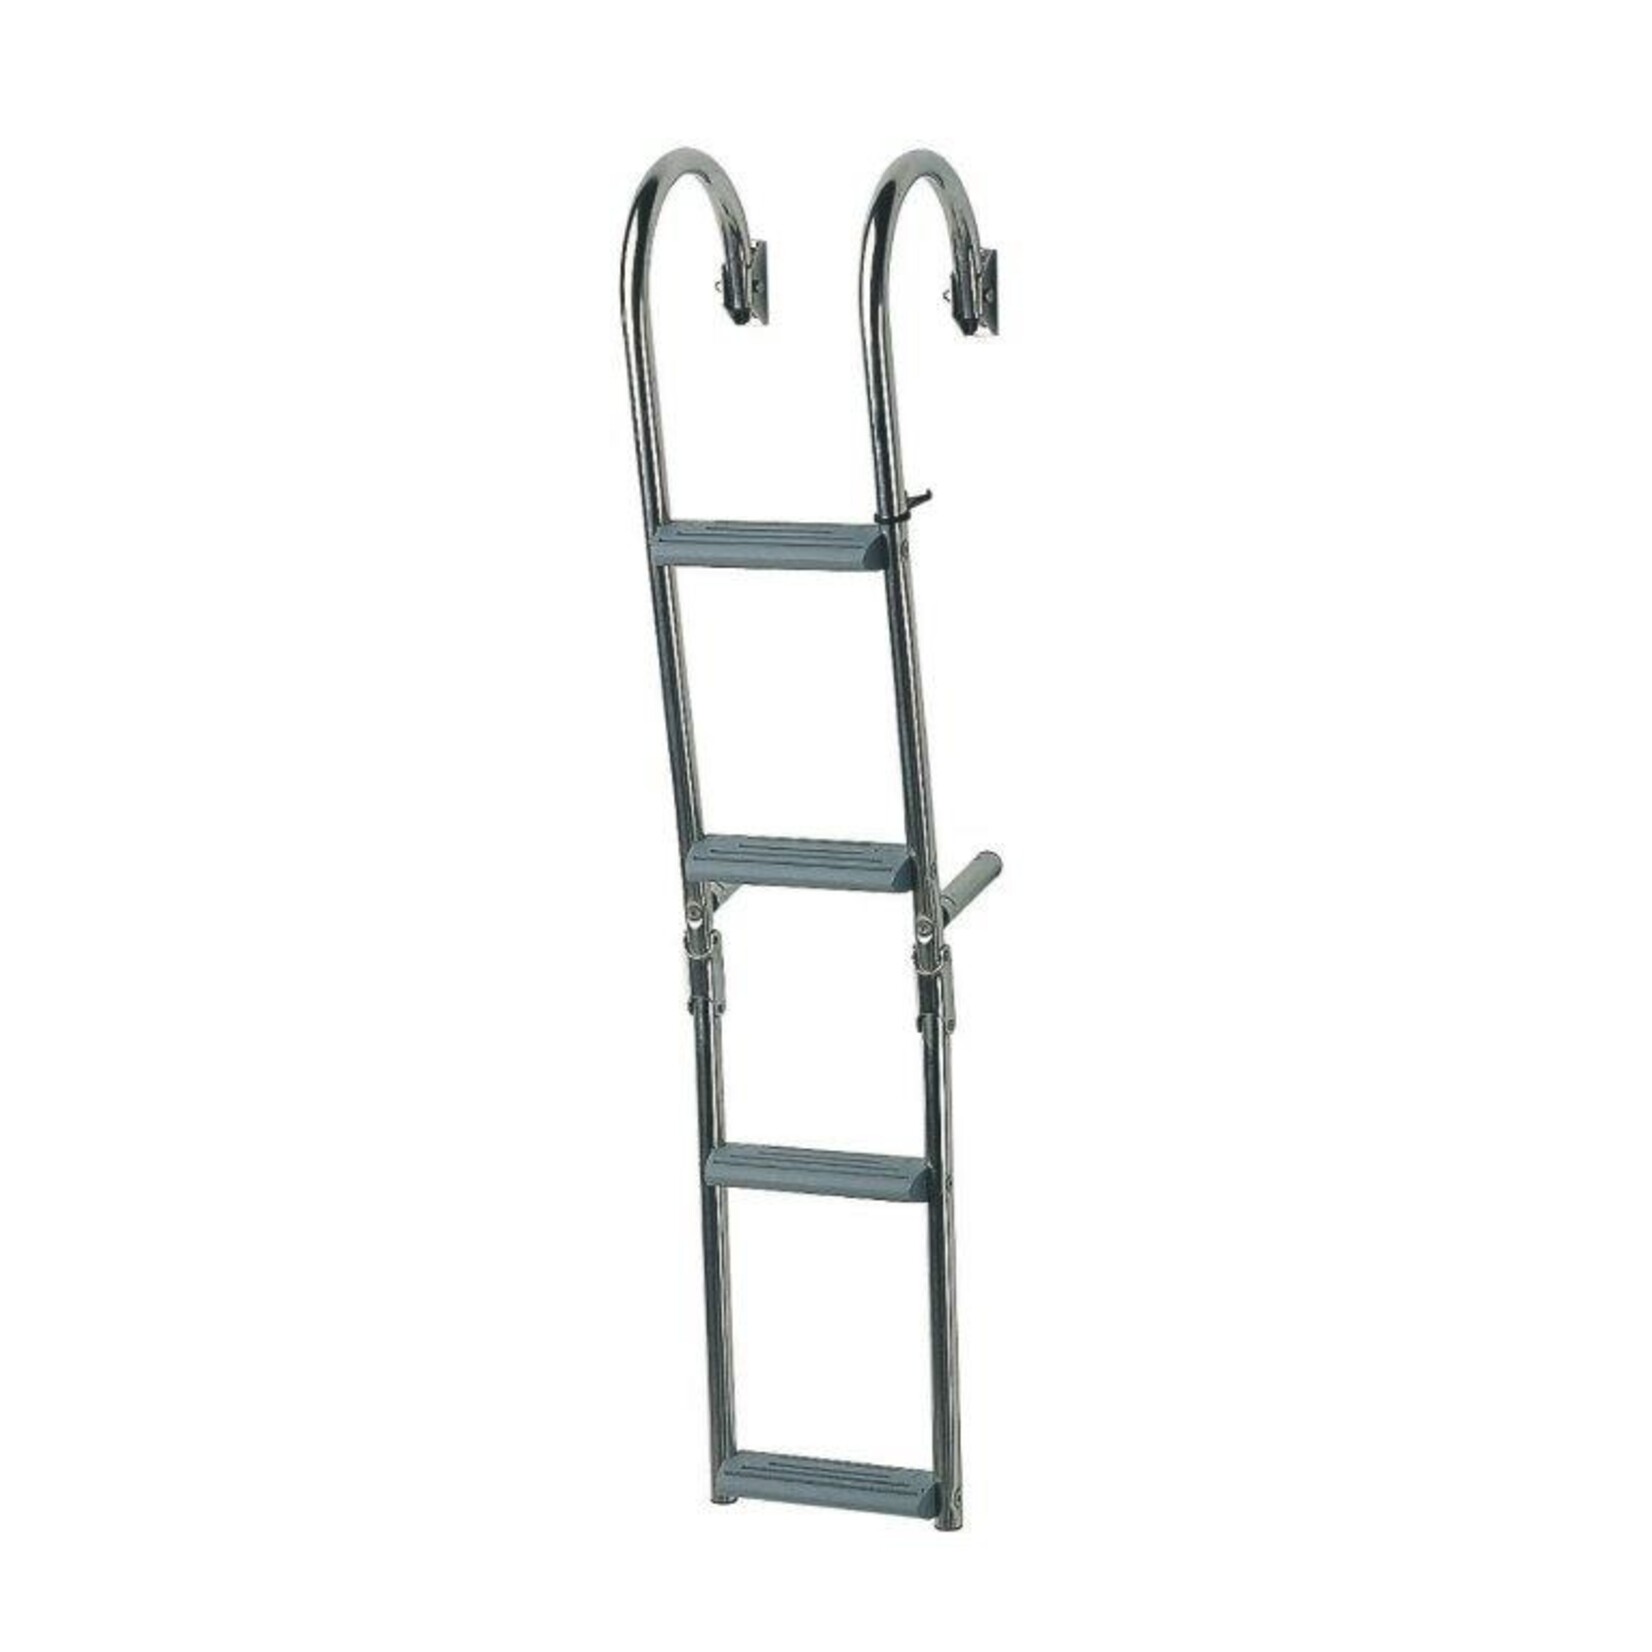 Plastimo Ladder 2+2 angle crook 180d nrow st